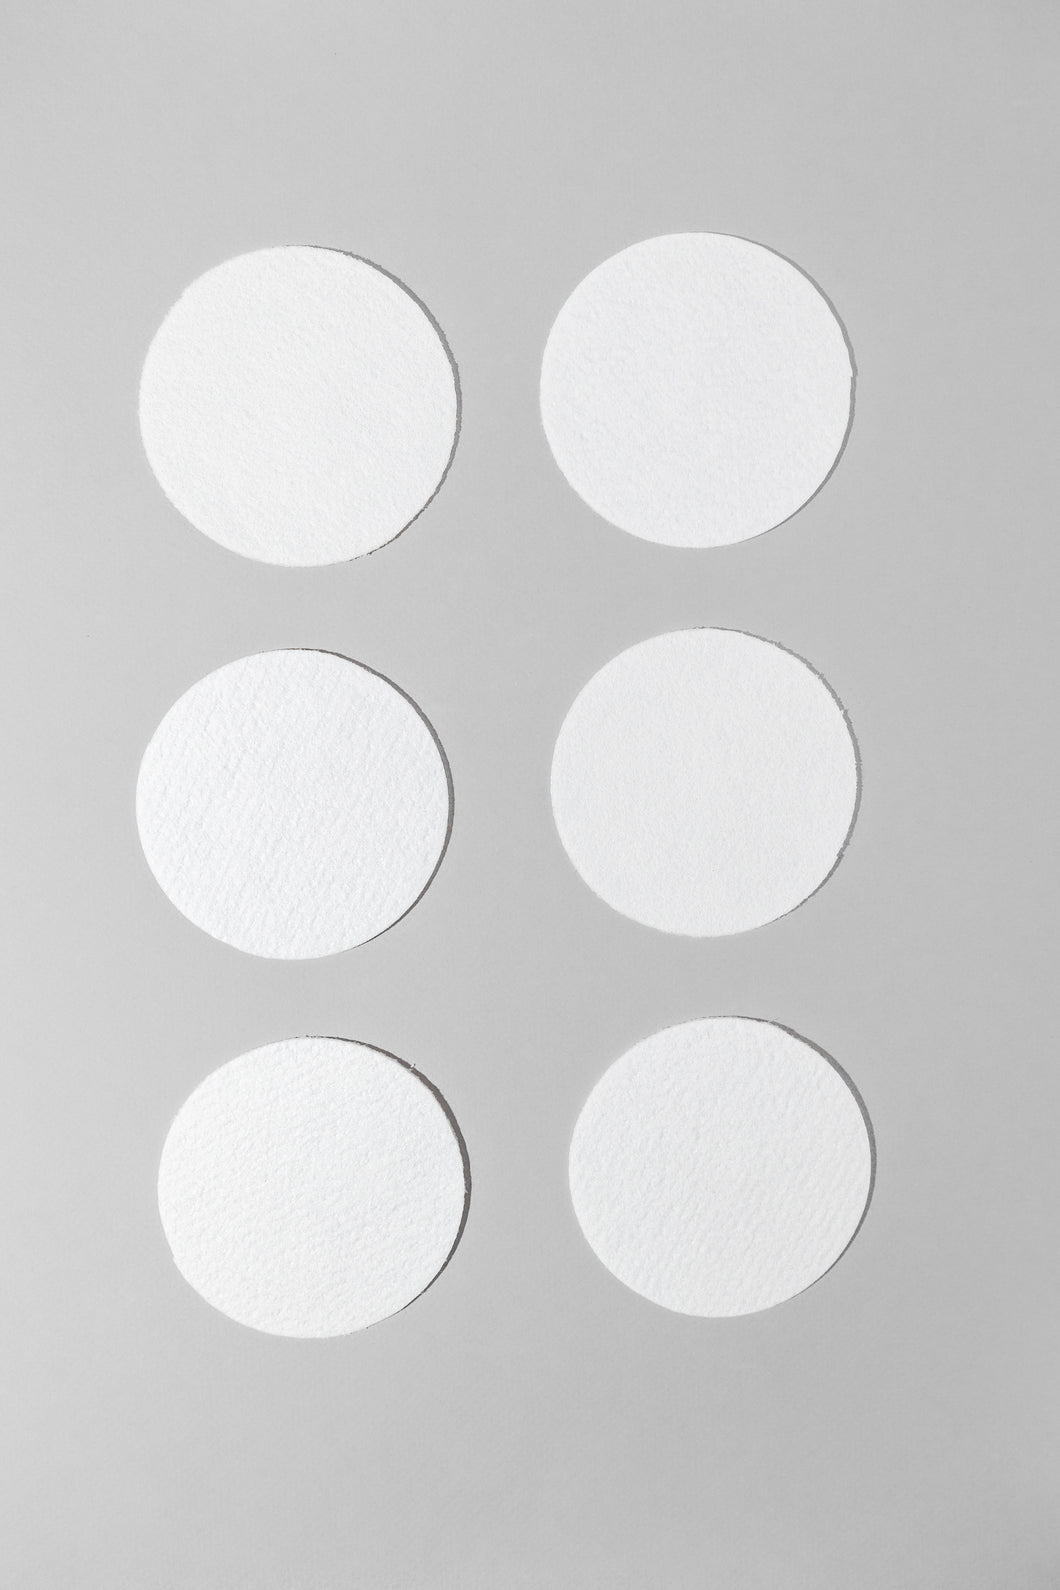 Synthetic Jar Lid Filter Discs